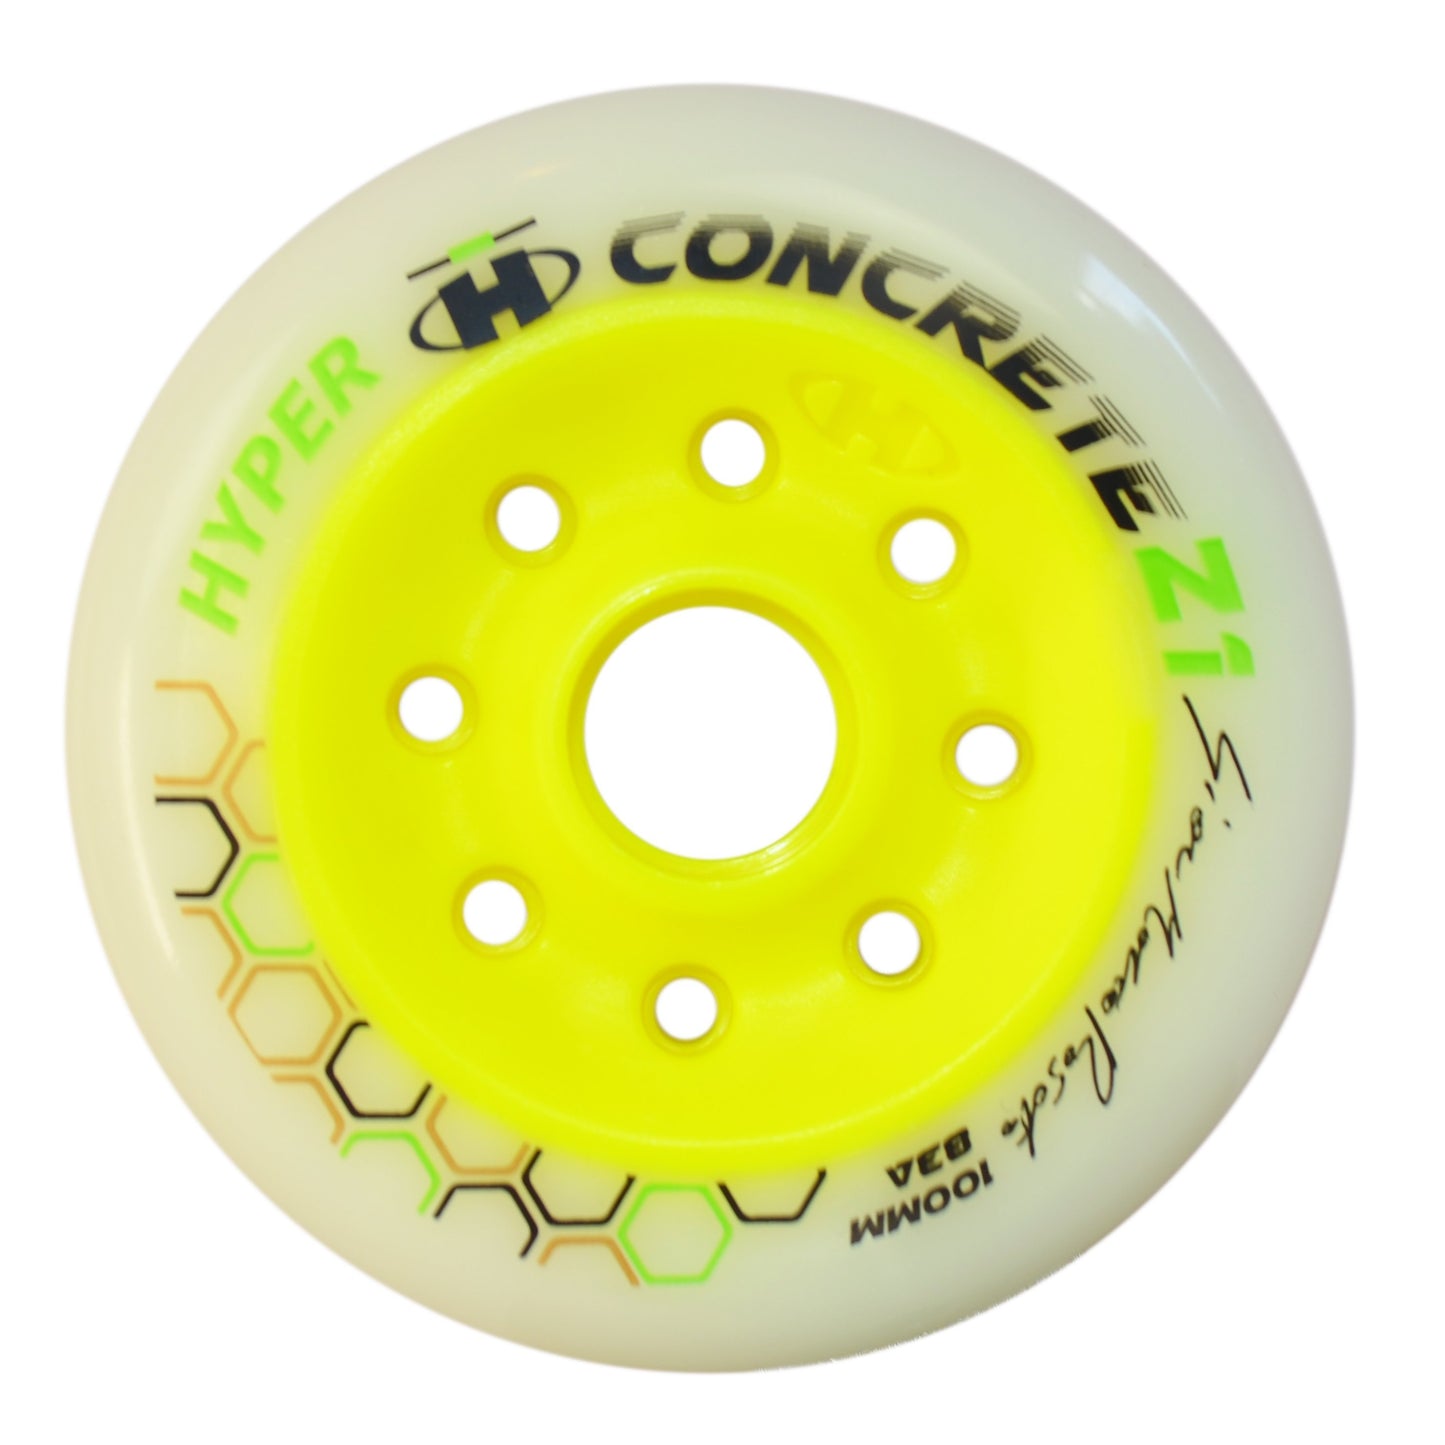 Hyper Concrete z1 Rosato 100mm White/Yellow 2 pack